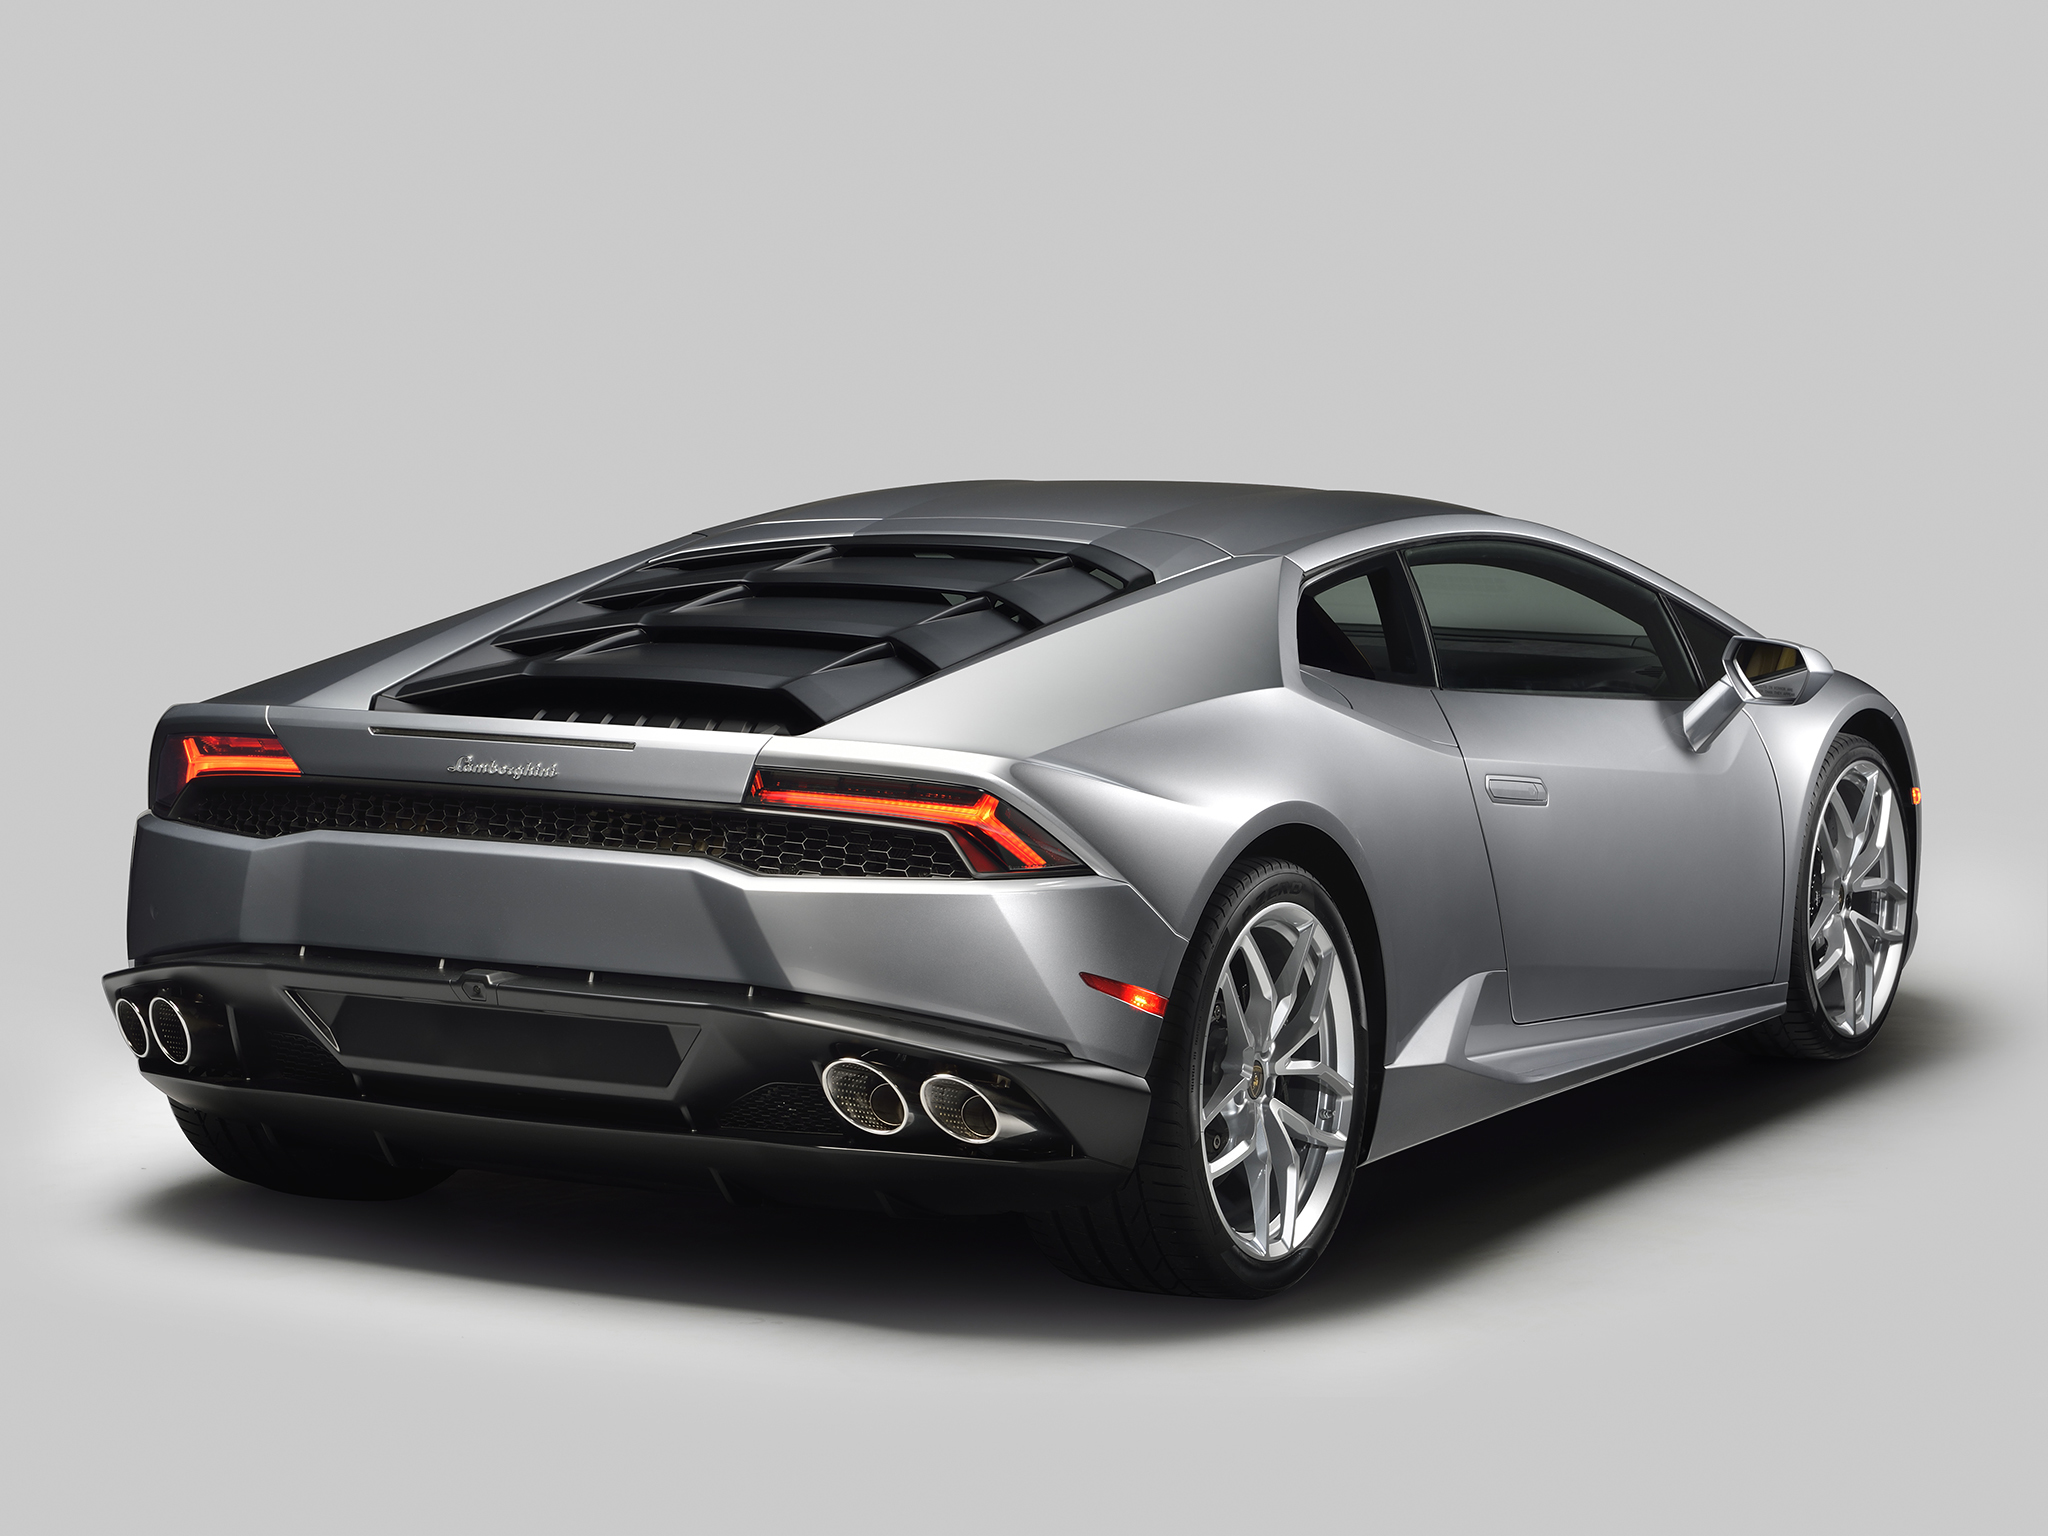 New Car Lamborghini Huracan Wallpaper And Image